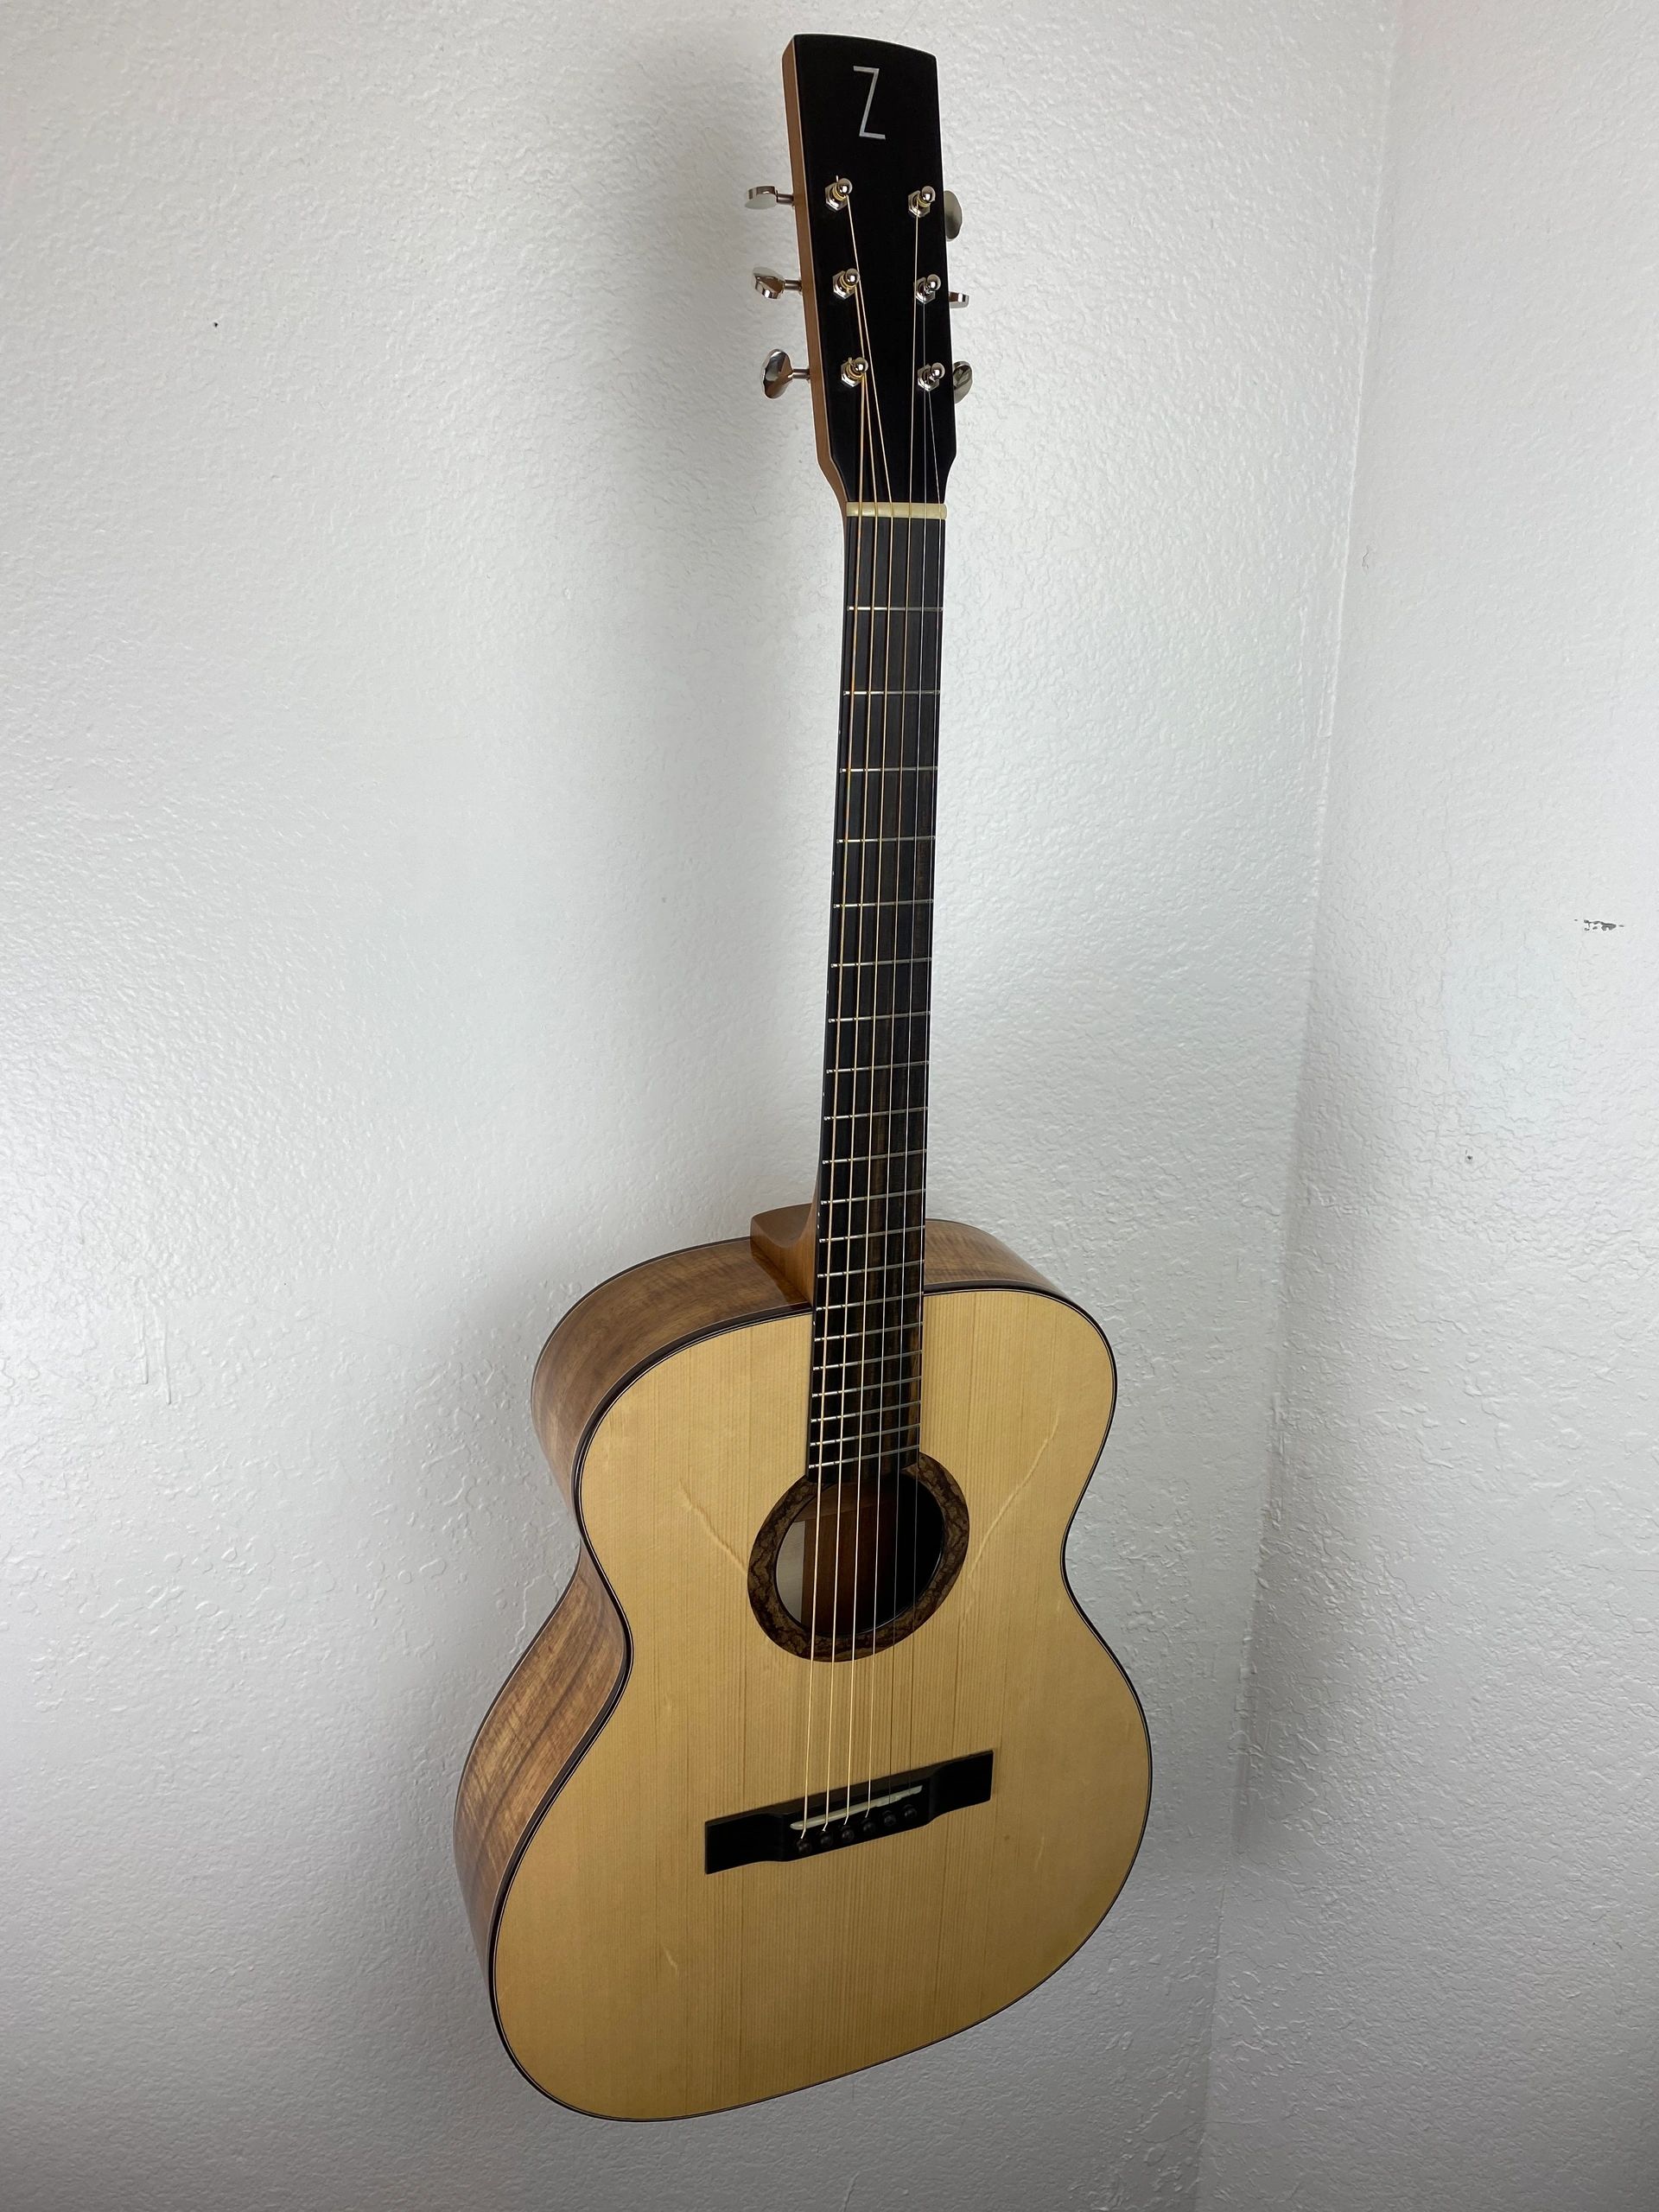 Zimbelman Guitar

Hand-built acoustic guitar in Colorado Springs, CO